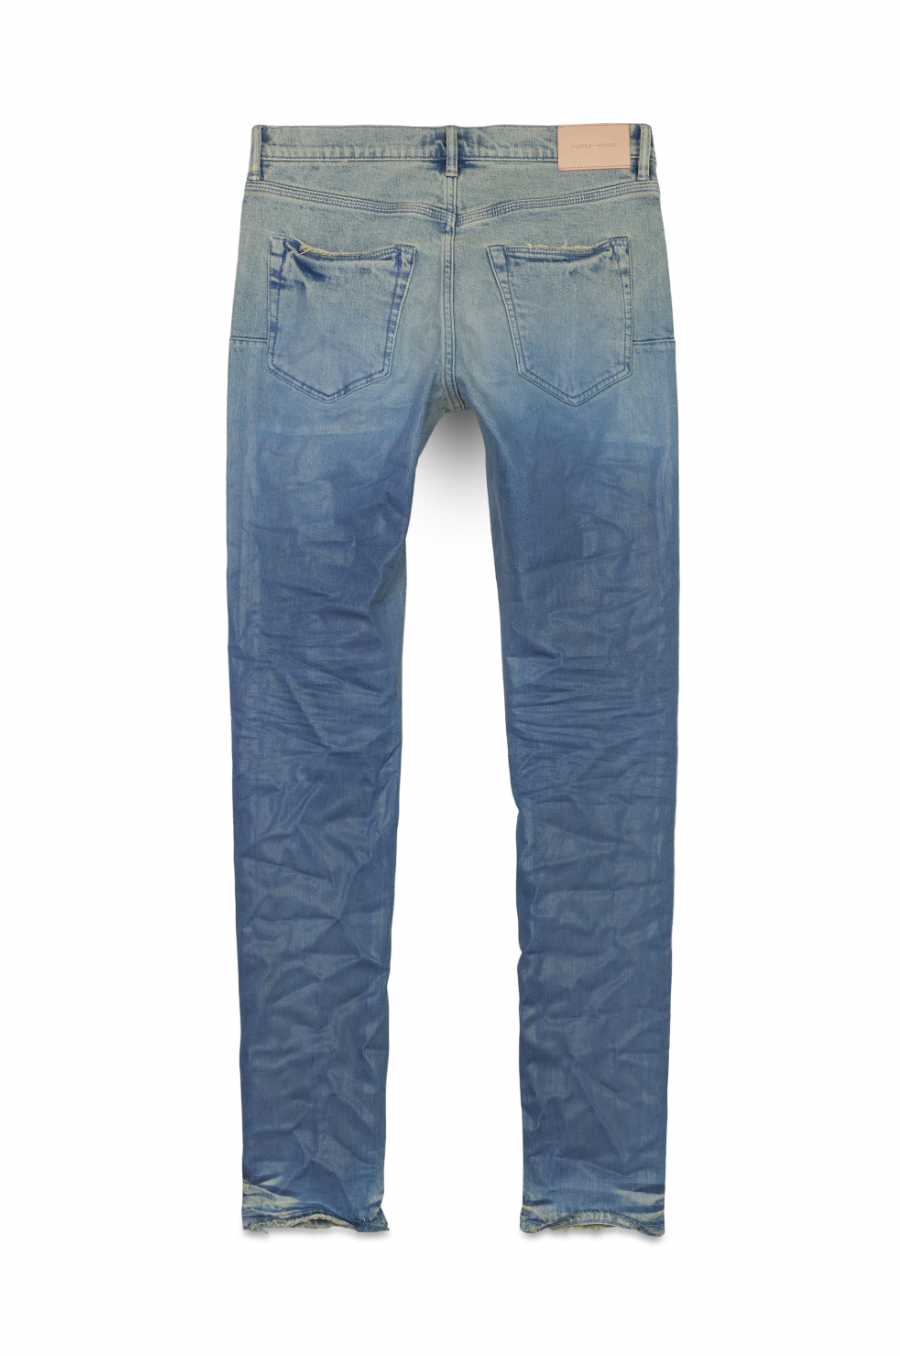 Purple Brand Light Indigo Placid Blue Color Coated Gradient Jeans – Upper  Level 916